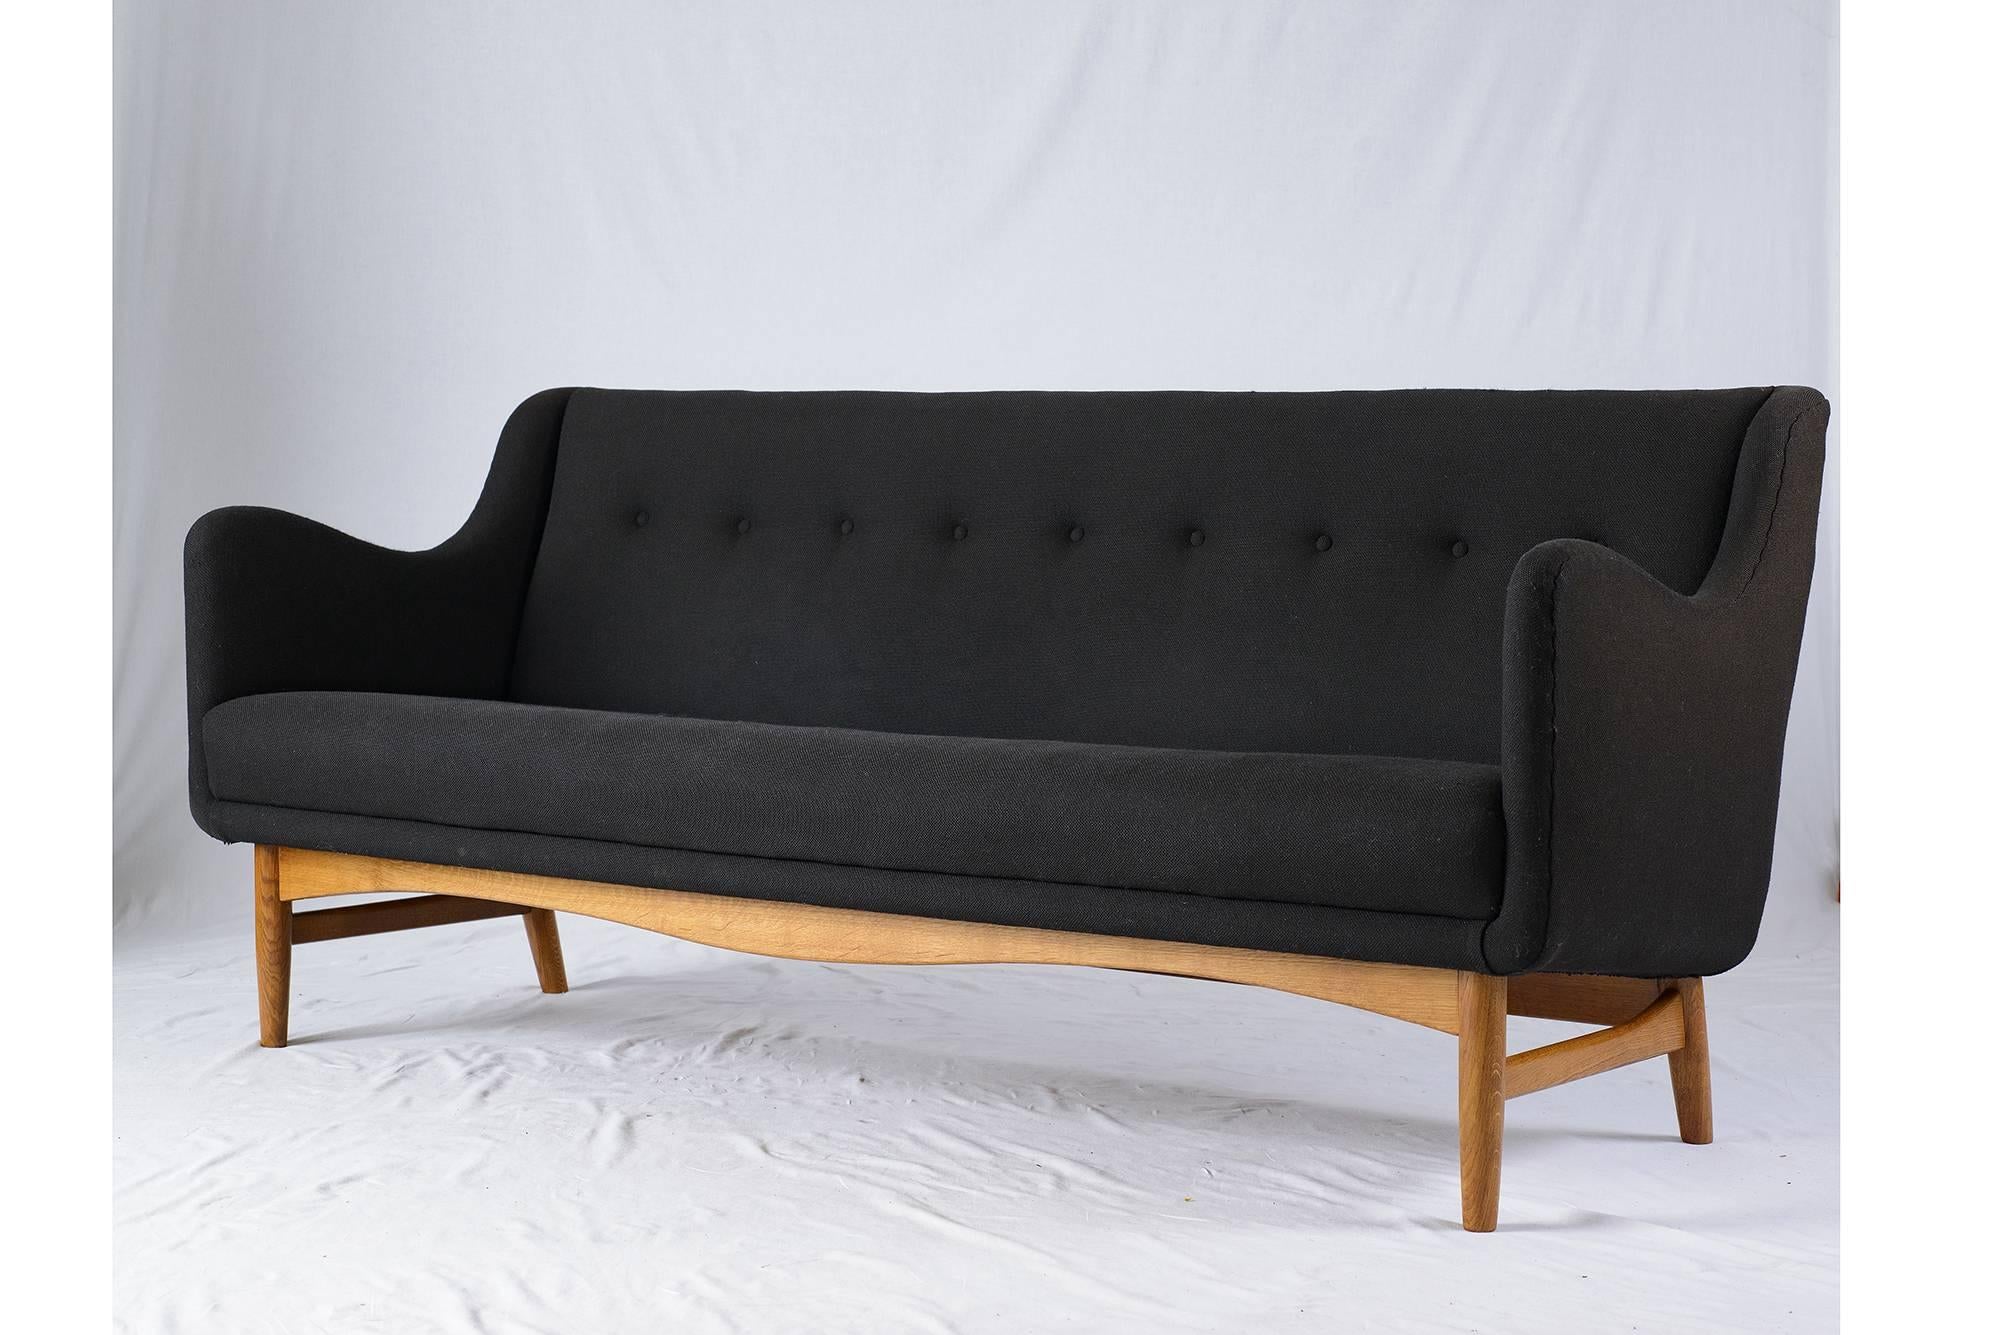 Finn Juhl sofa designed in 1954 and produced by Soren Willadsen.